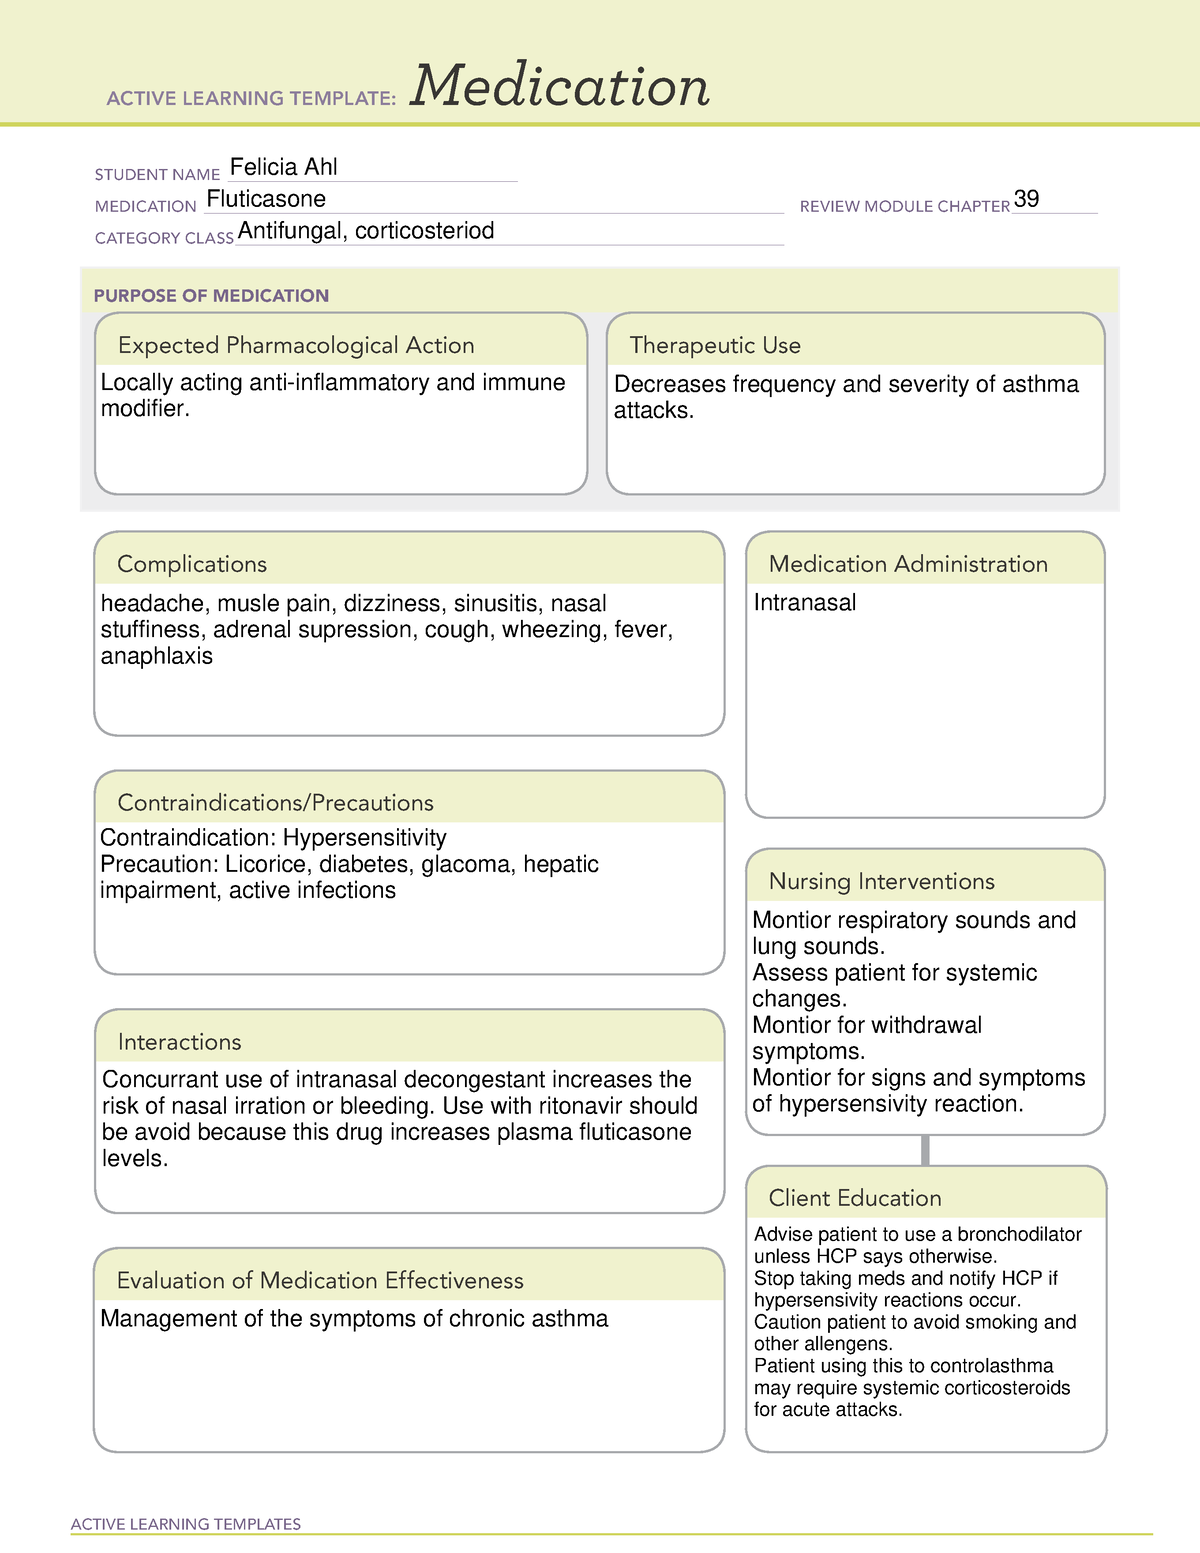 fluticasone-drug-cards-active-learning-templates-medication-student